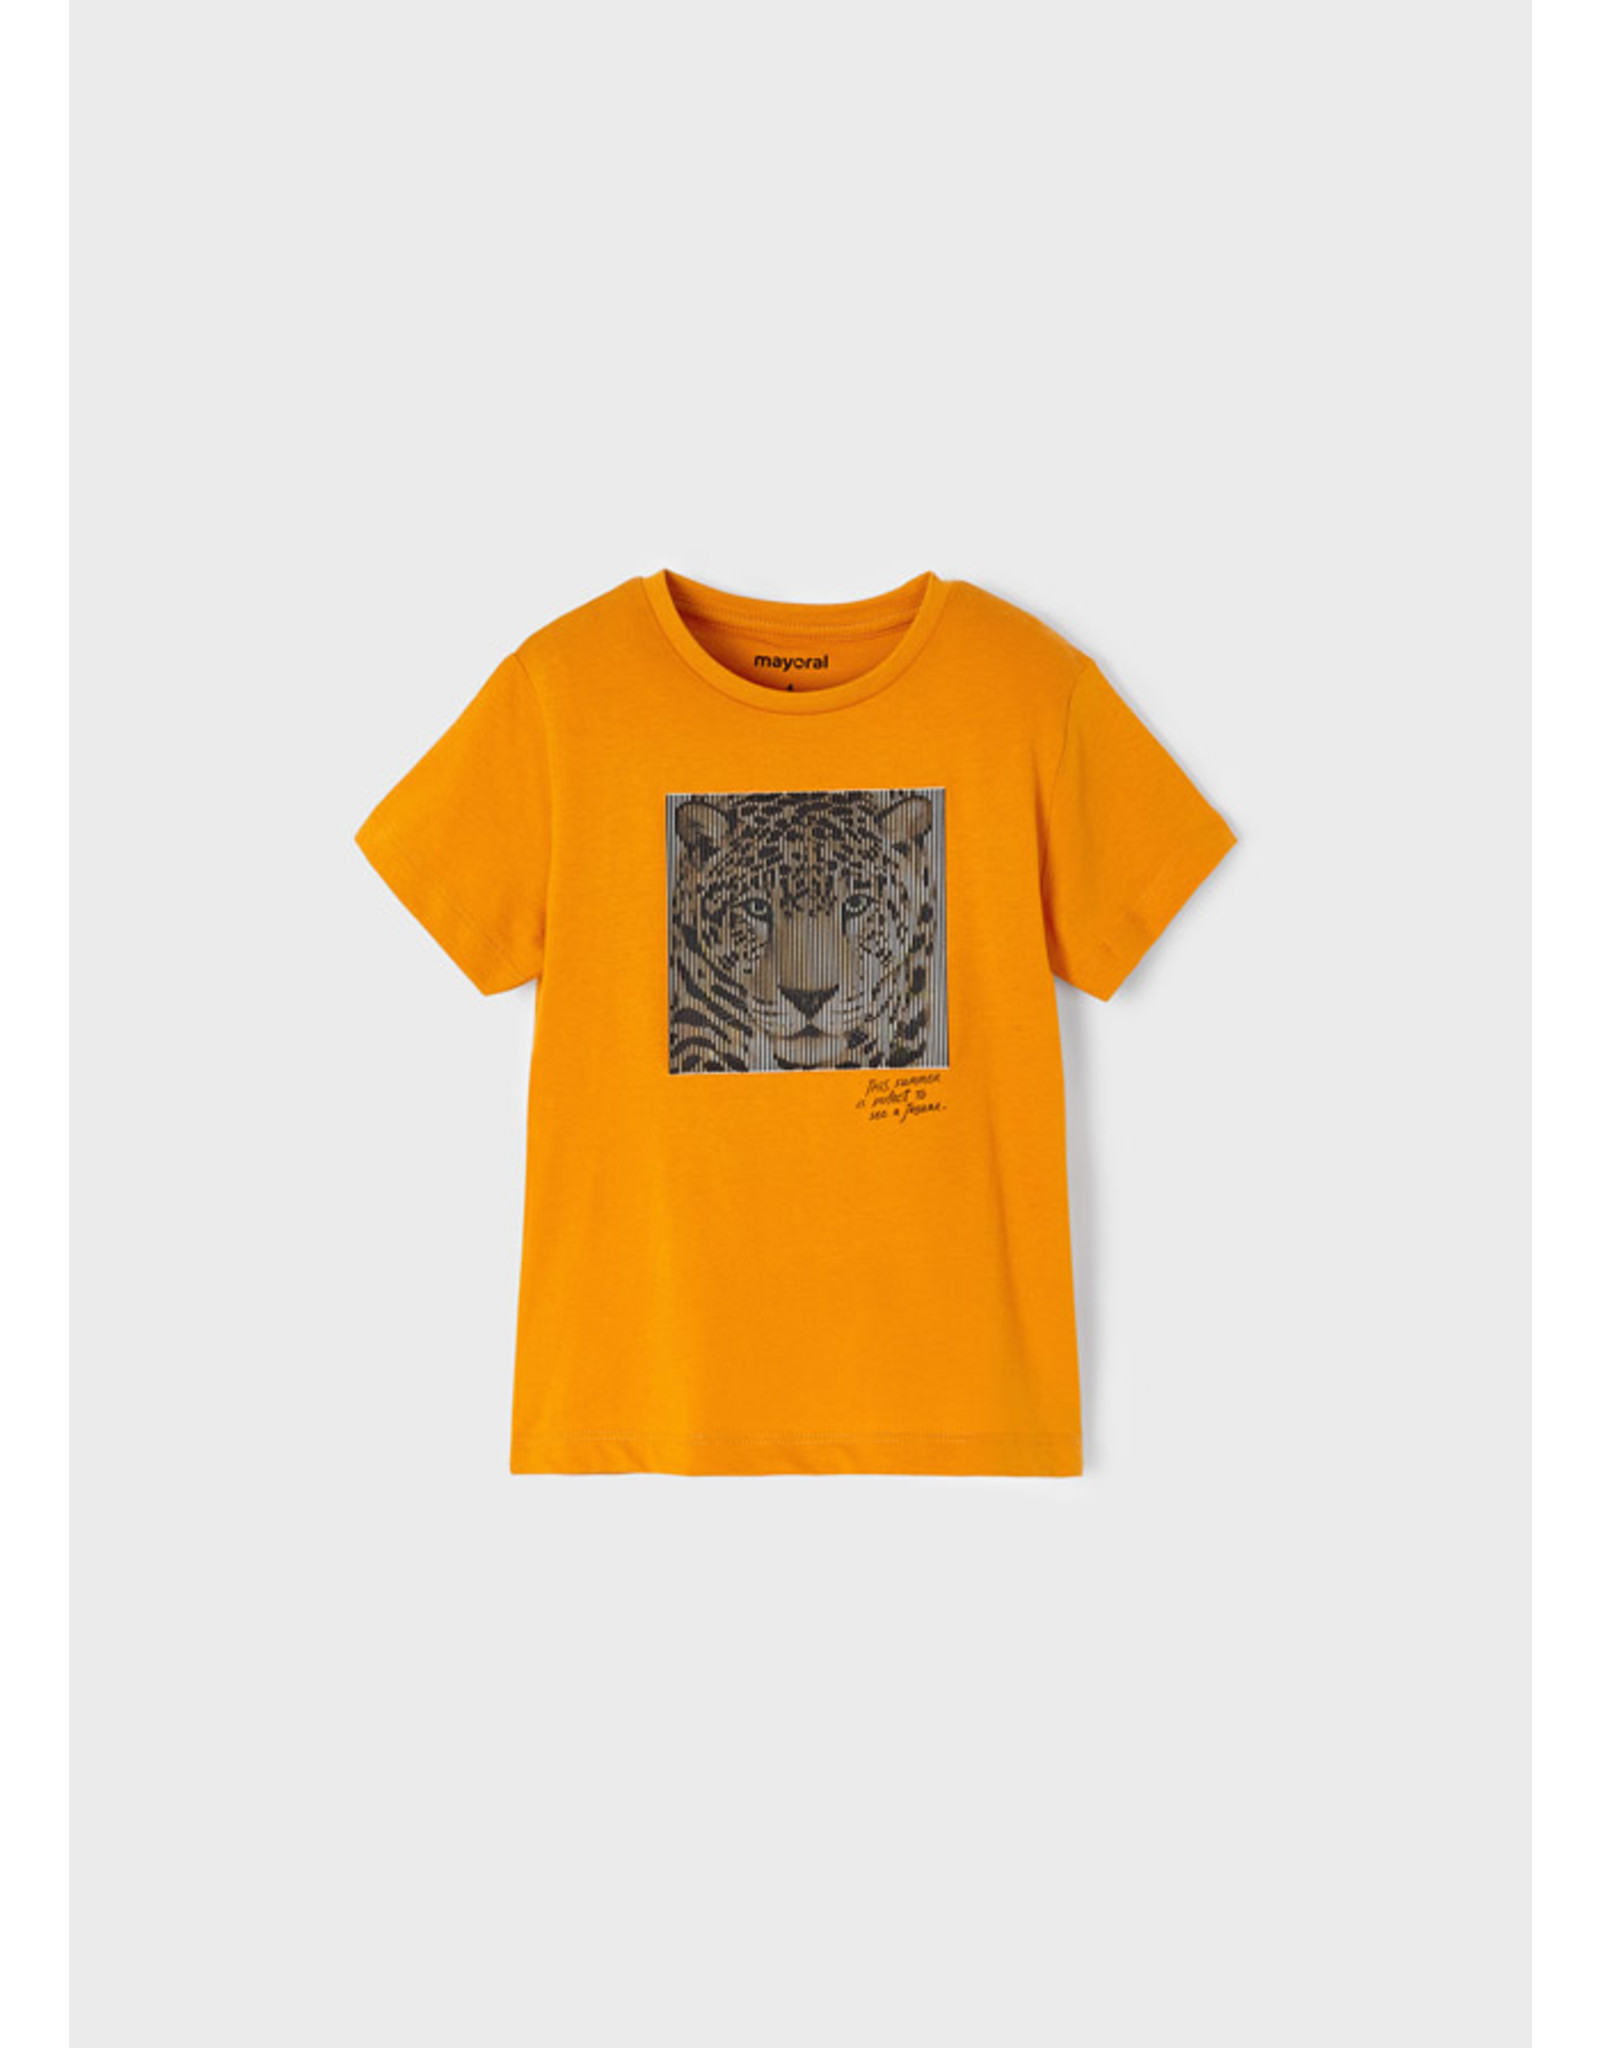 Mayoral S/s lenticular t-shirt Orange 3005-48